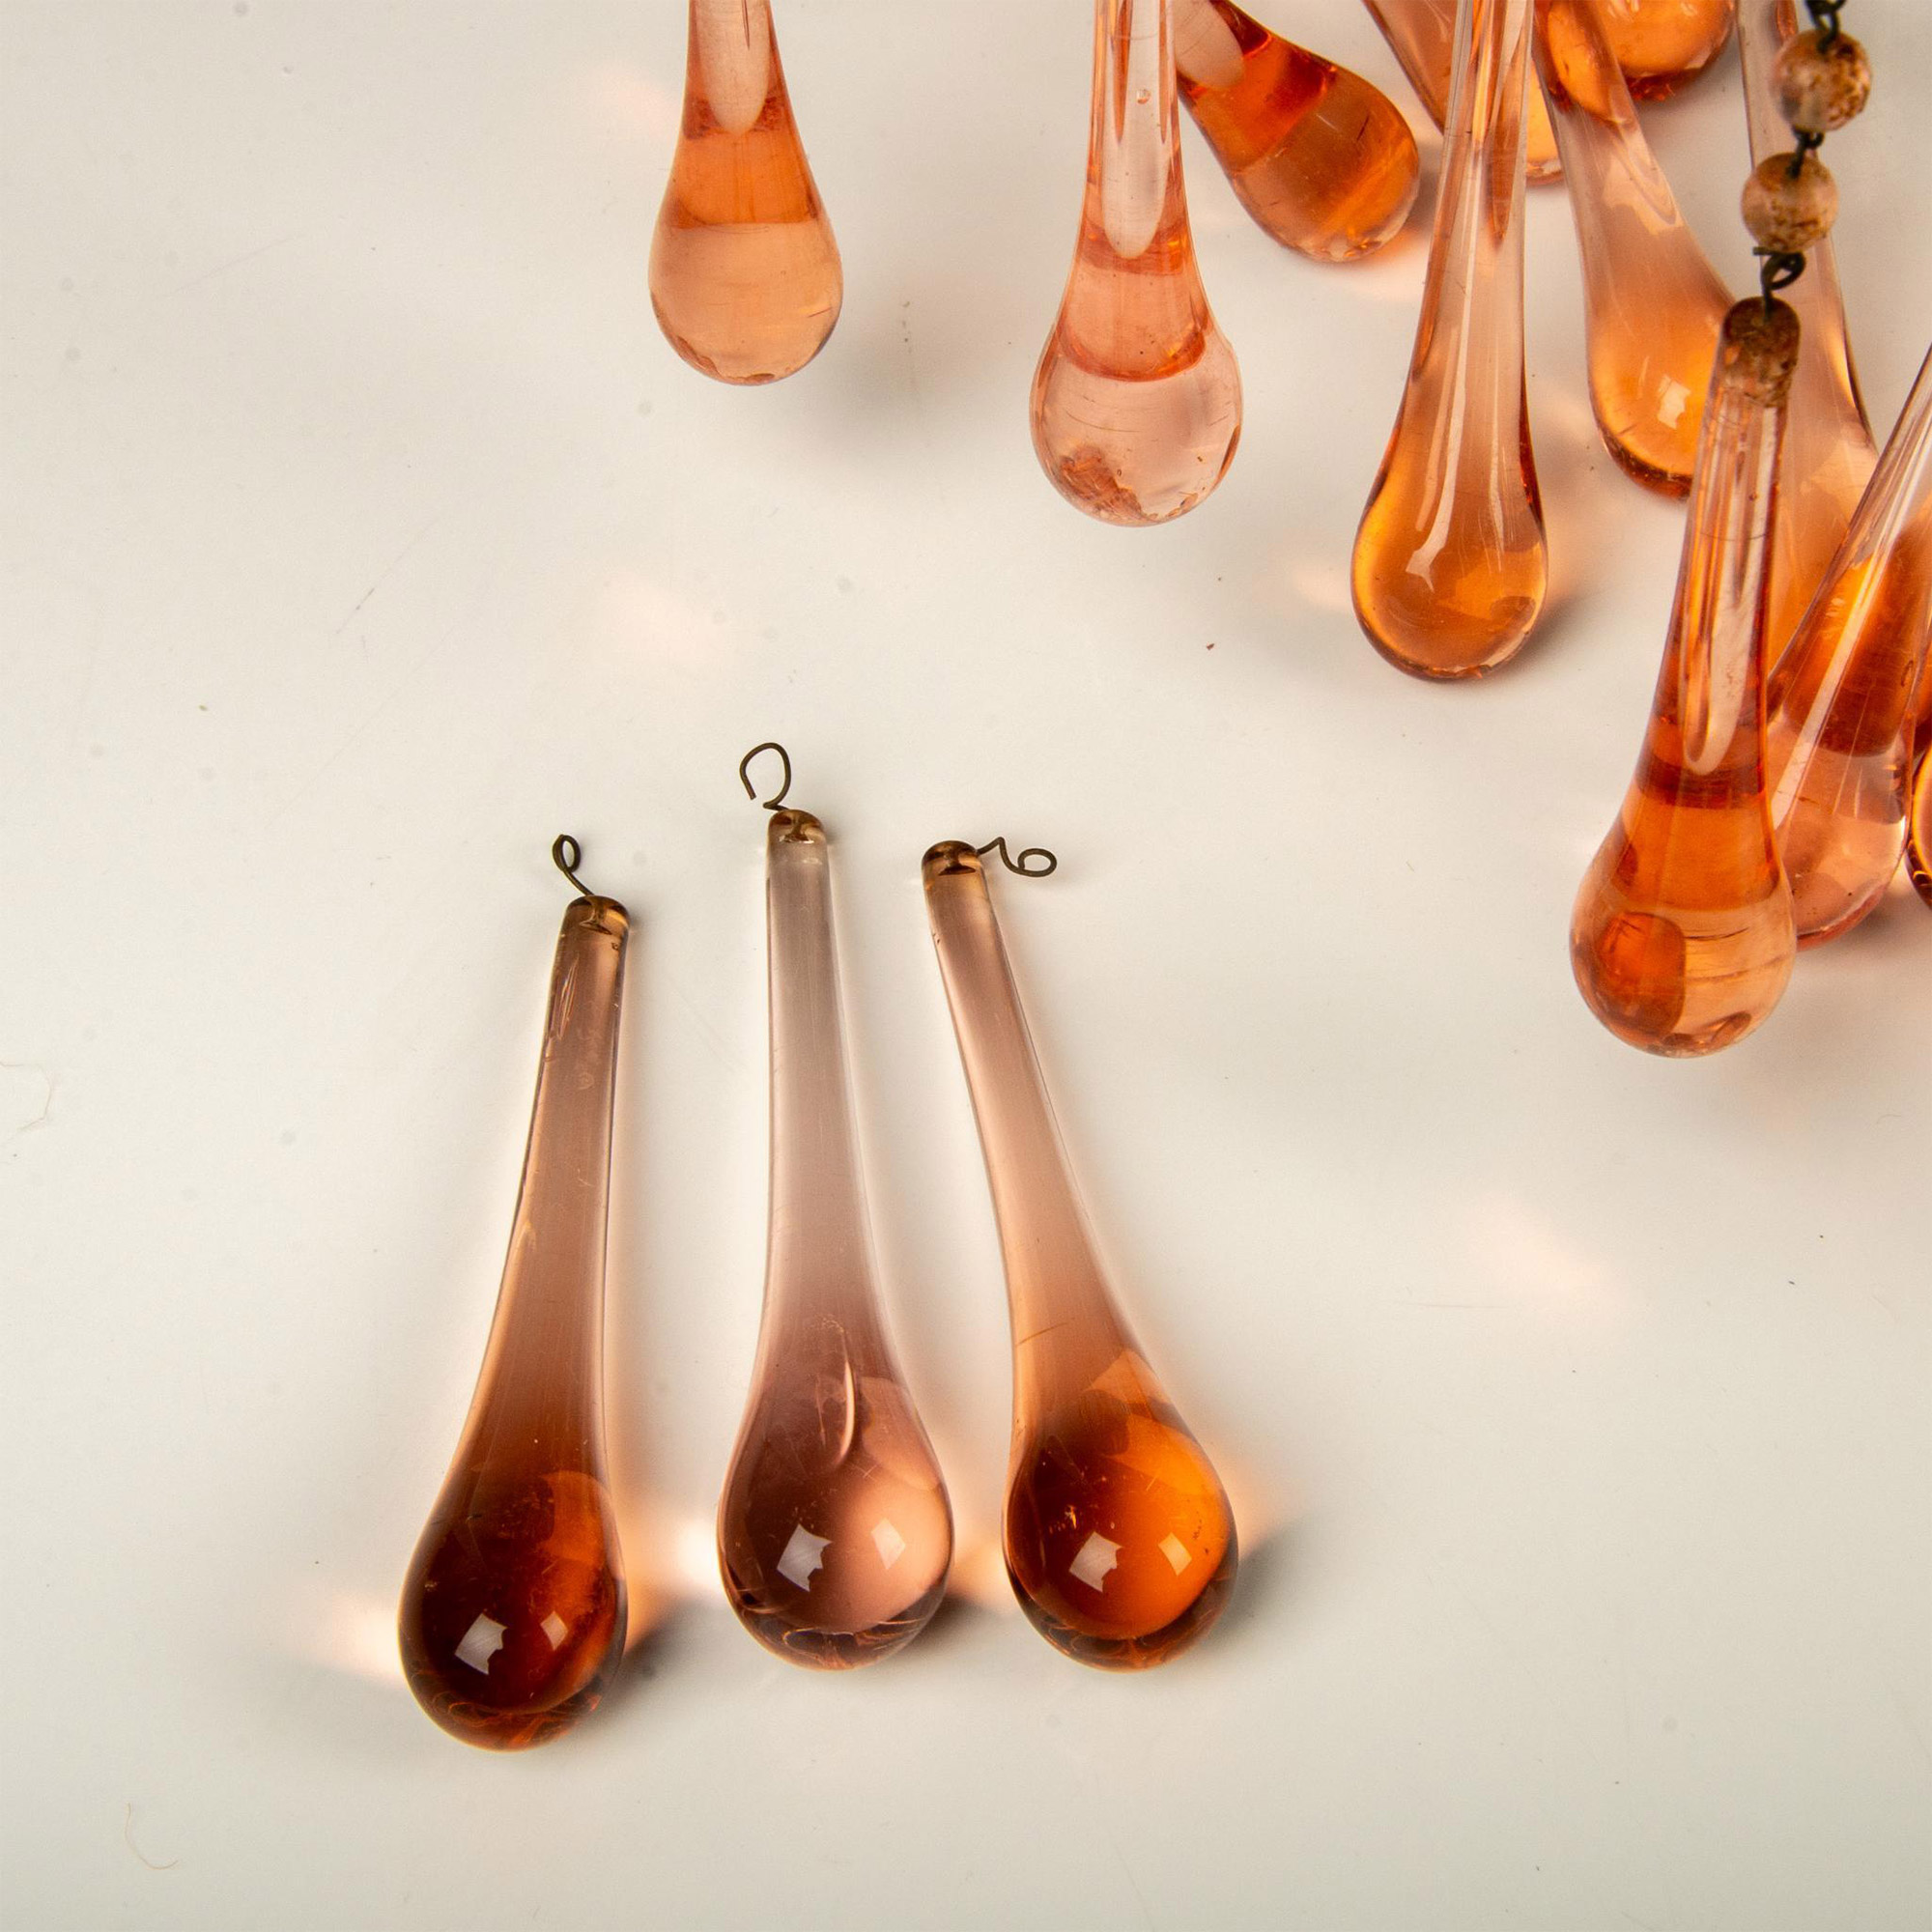 Pair of Vintage Raindrop Murano Glass Chandeliers - Image 9 of 9